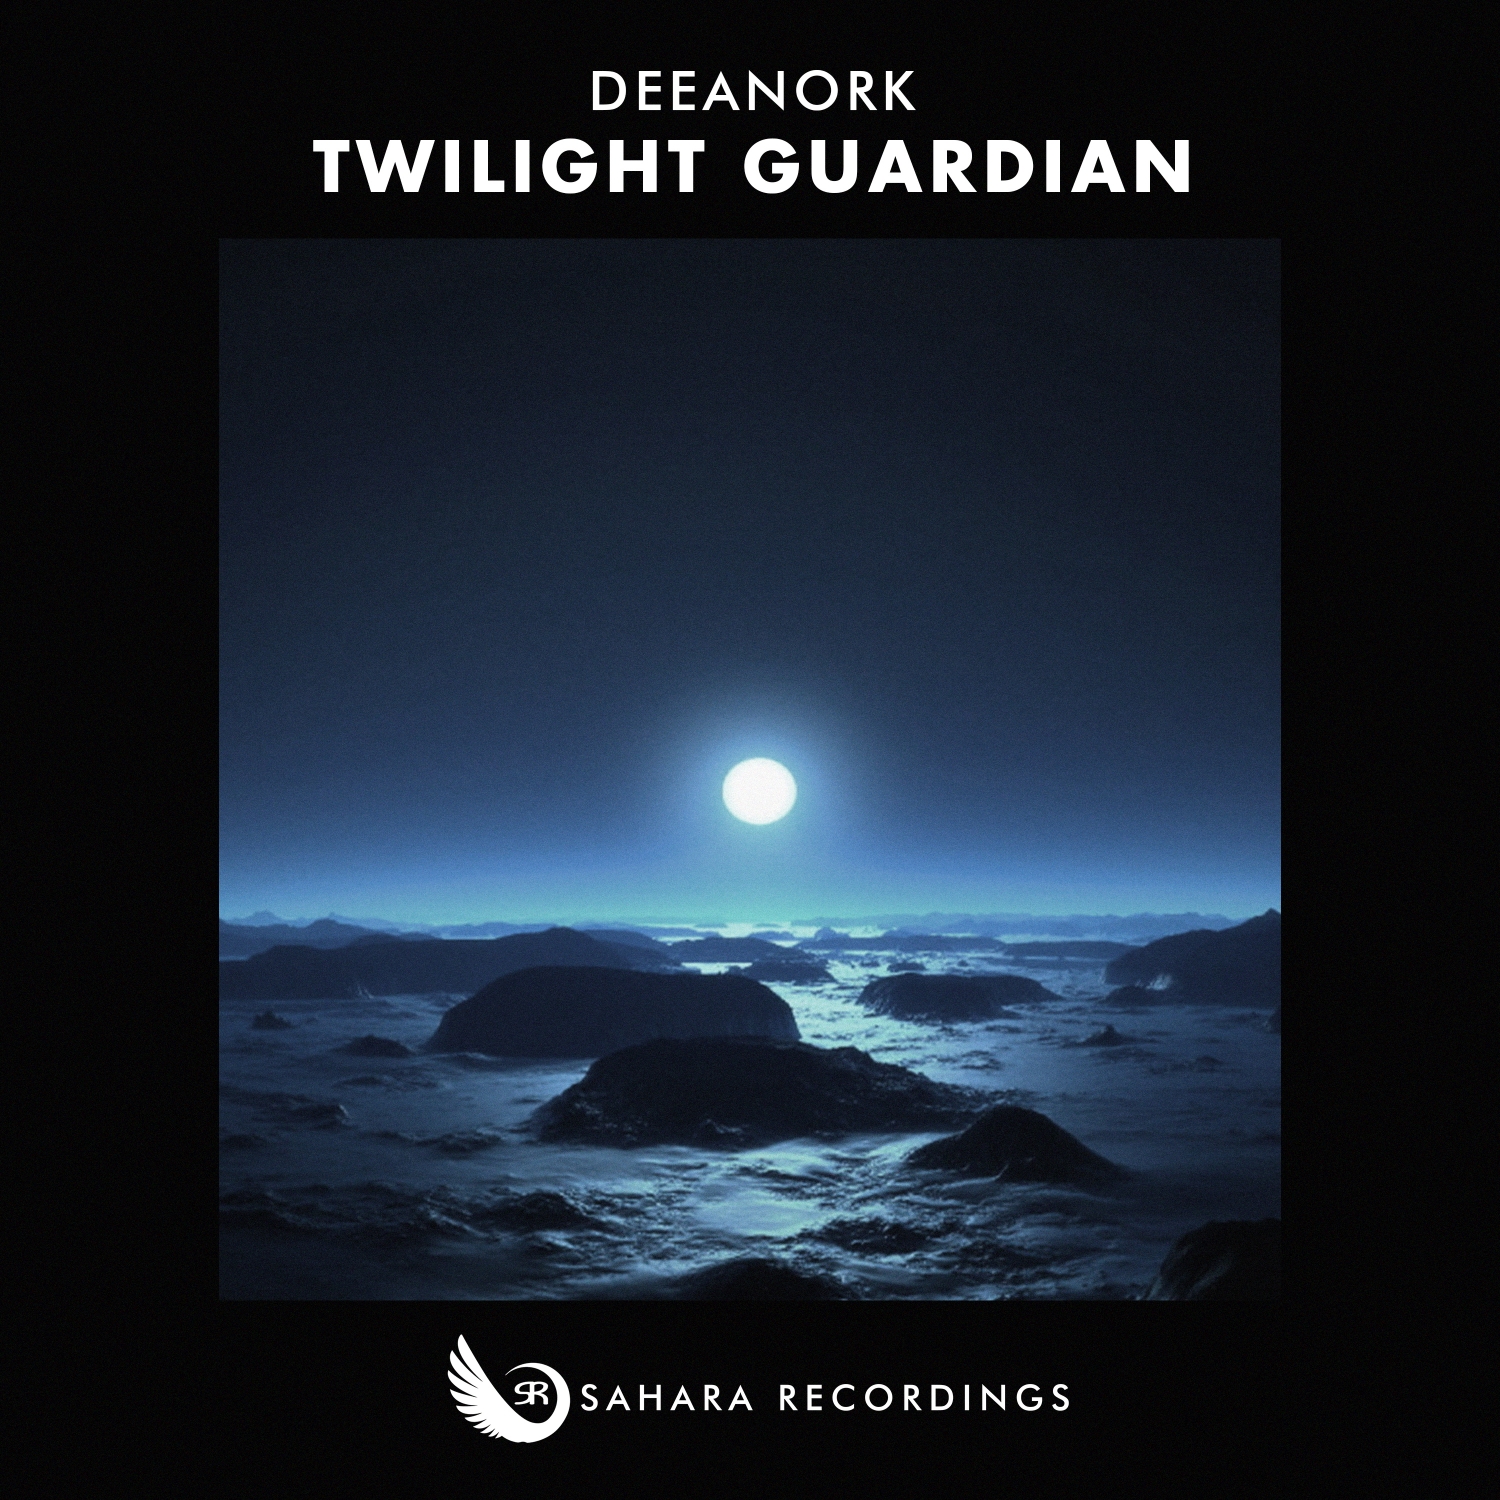 DeeAnork presents Twilight Guardian on Sahara Recordings